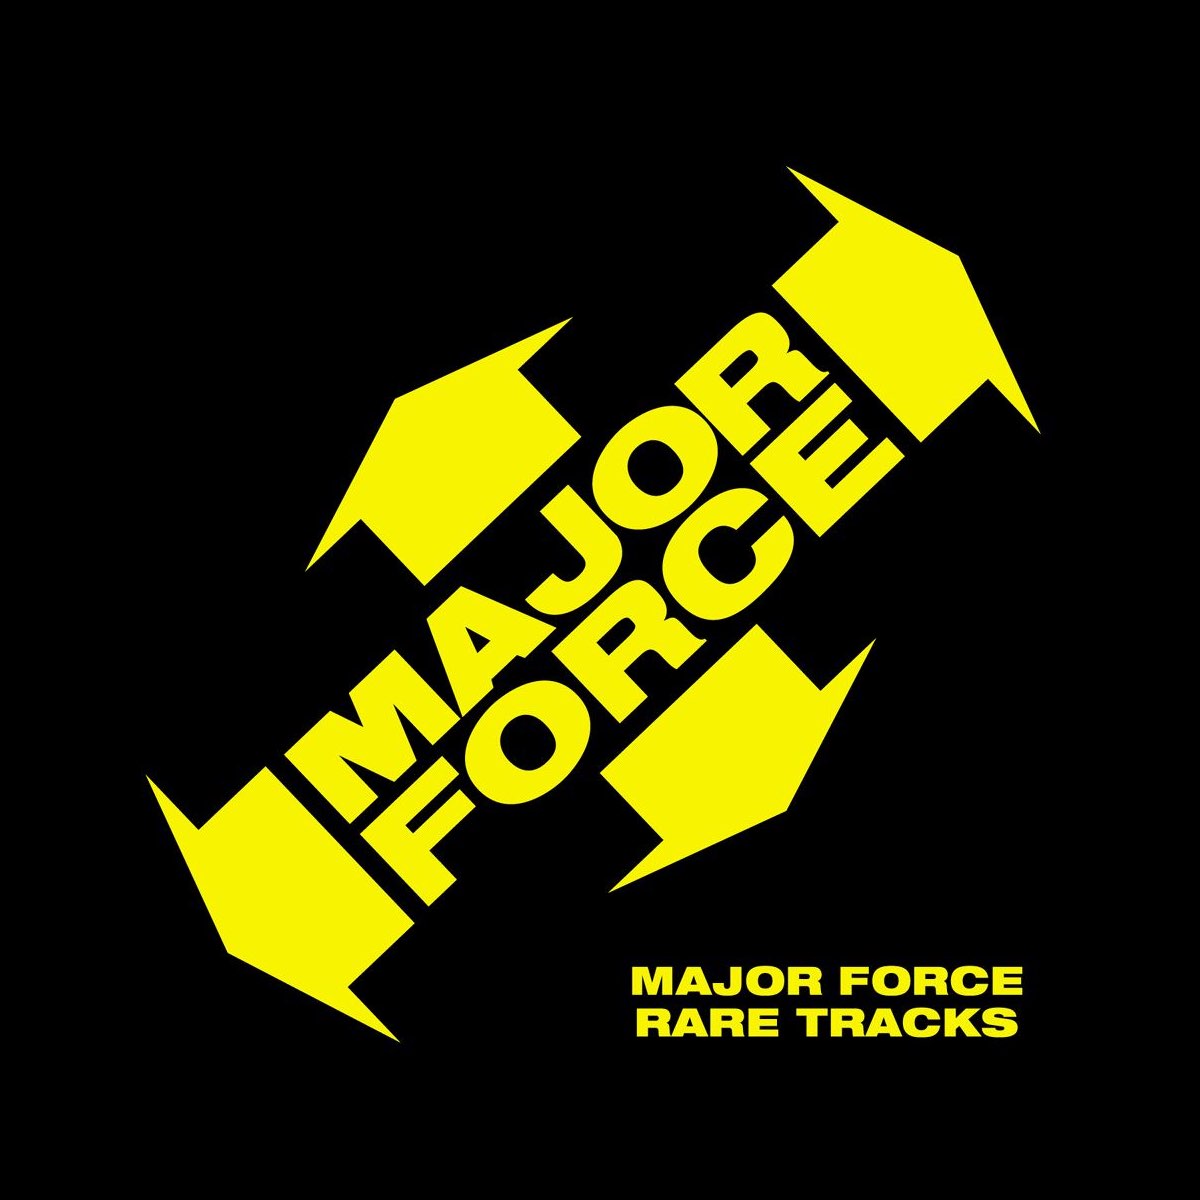 Force Major. Rare tracks. Middlename Force Major. Production Forces. Зовите меня форс мажор